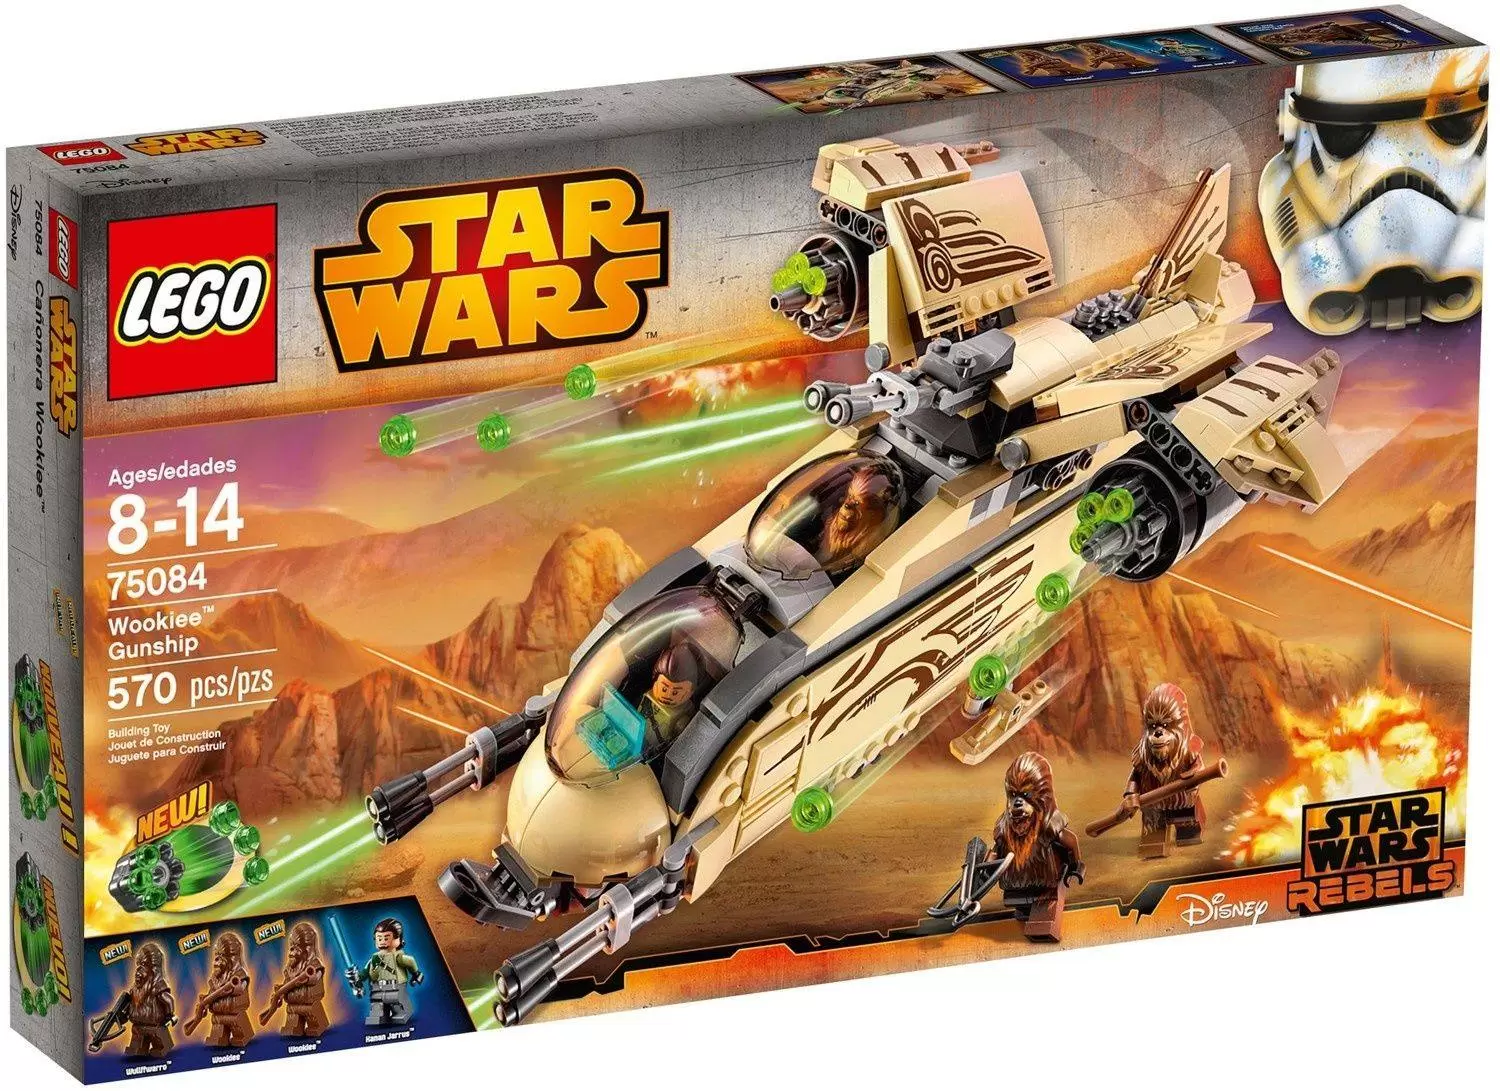 LEGO Star Wars - Wookiee Gunship